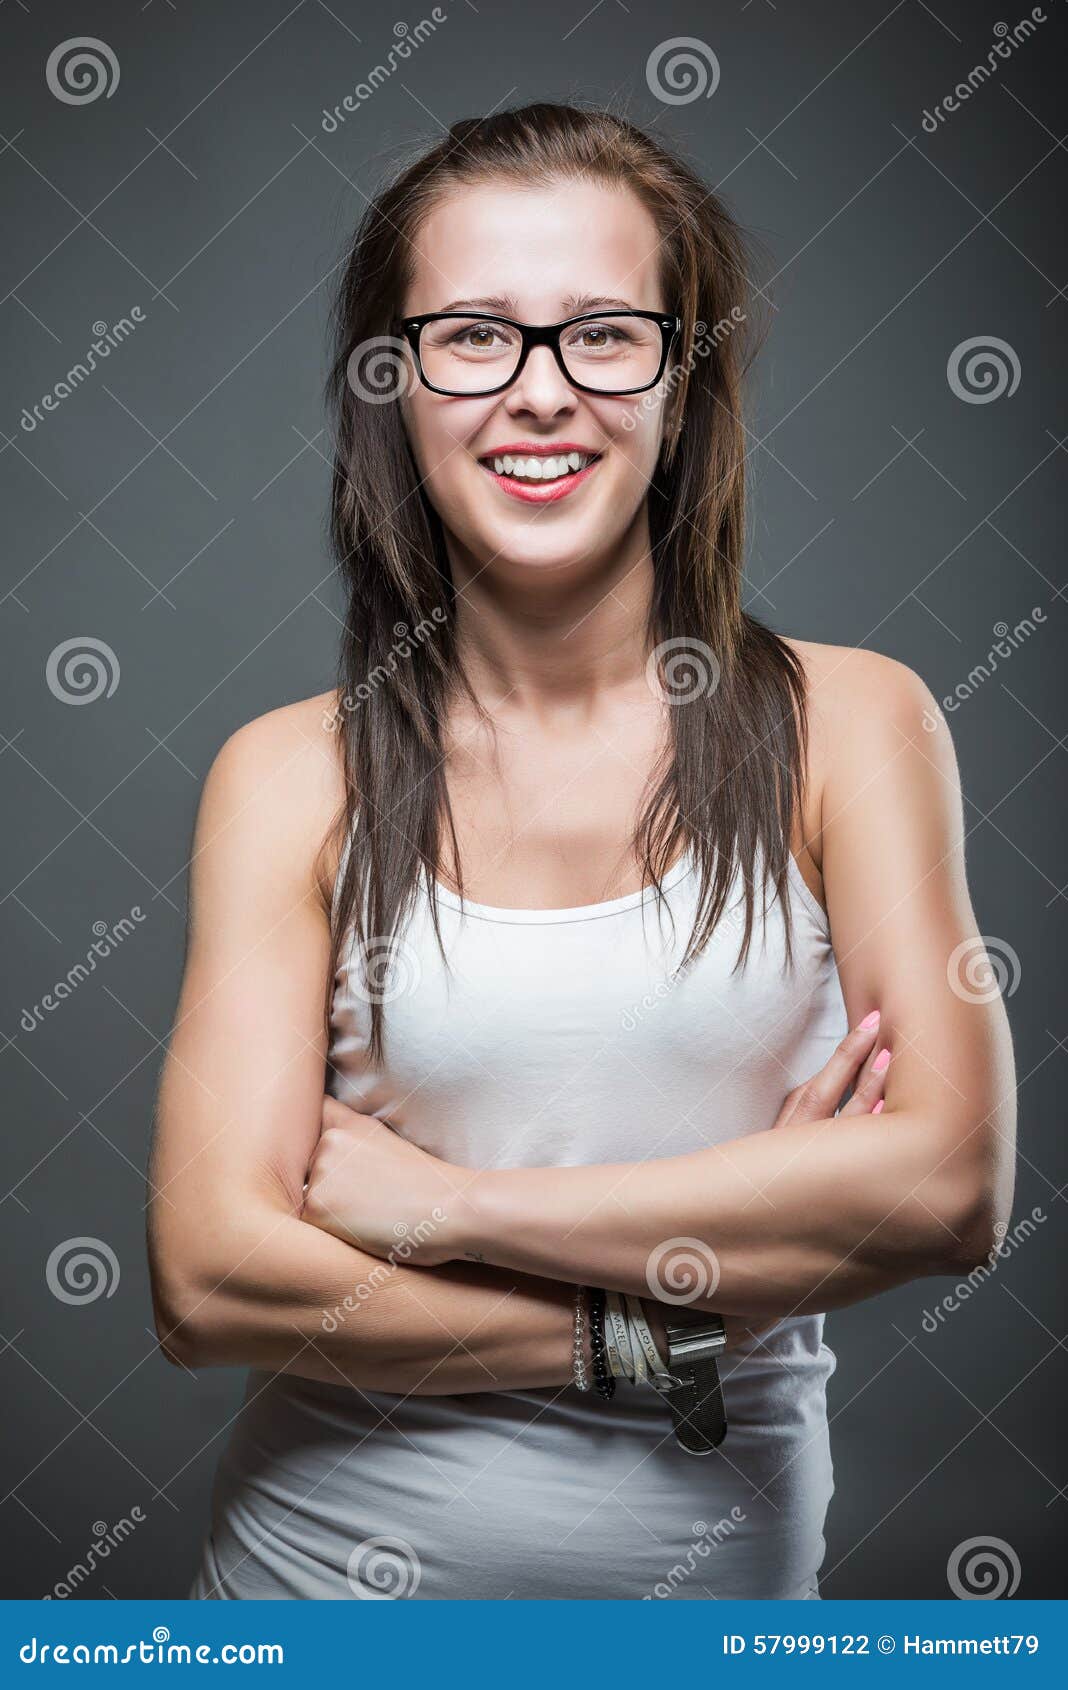 nerdy girl glasses swallows sex photo